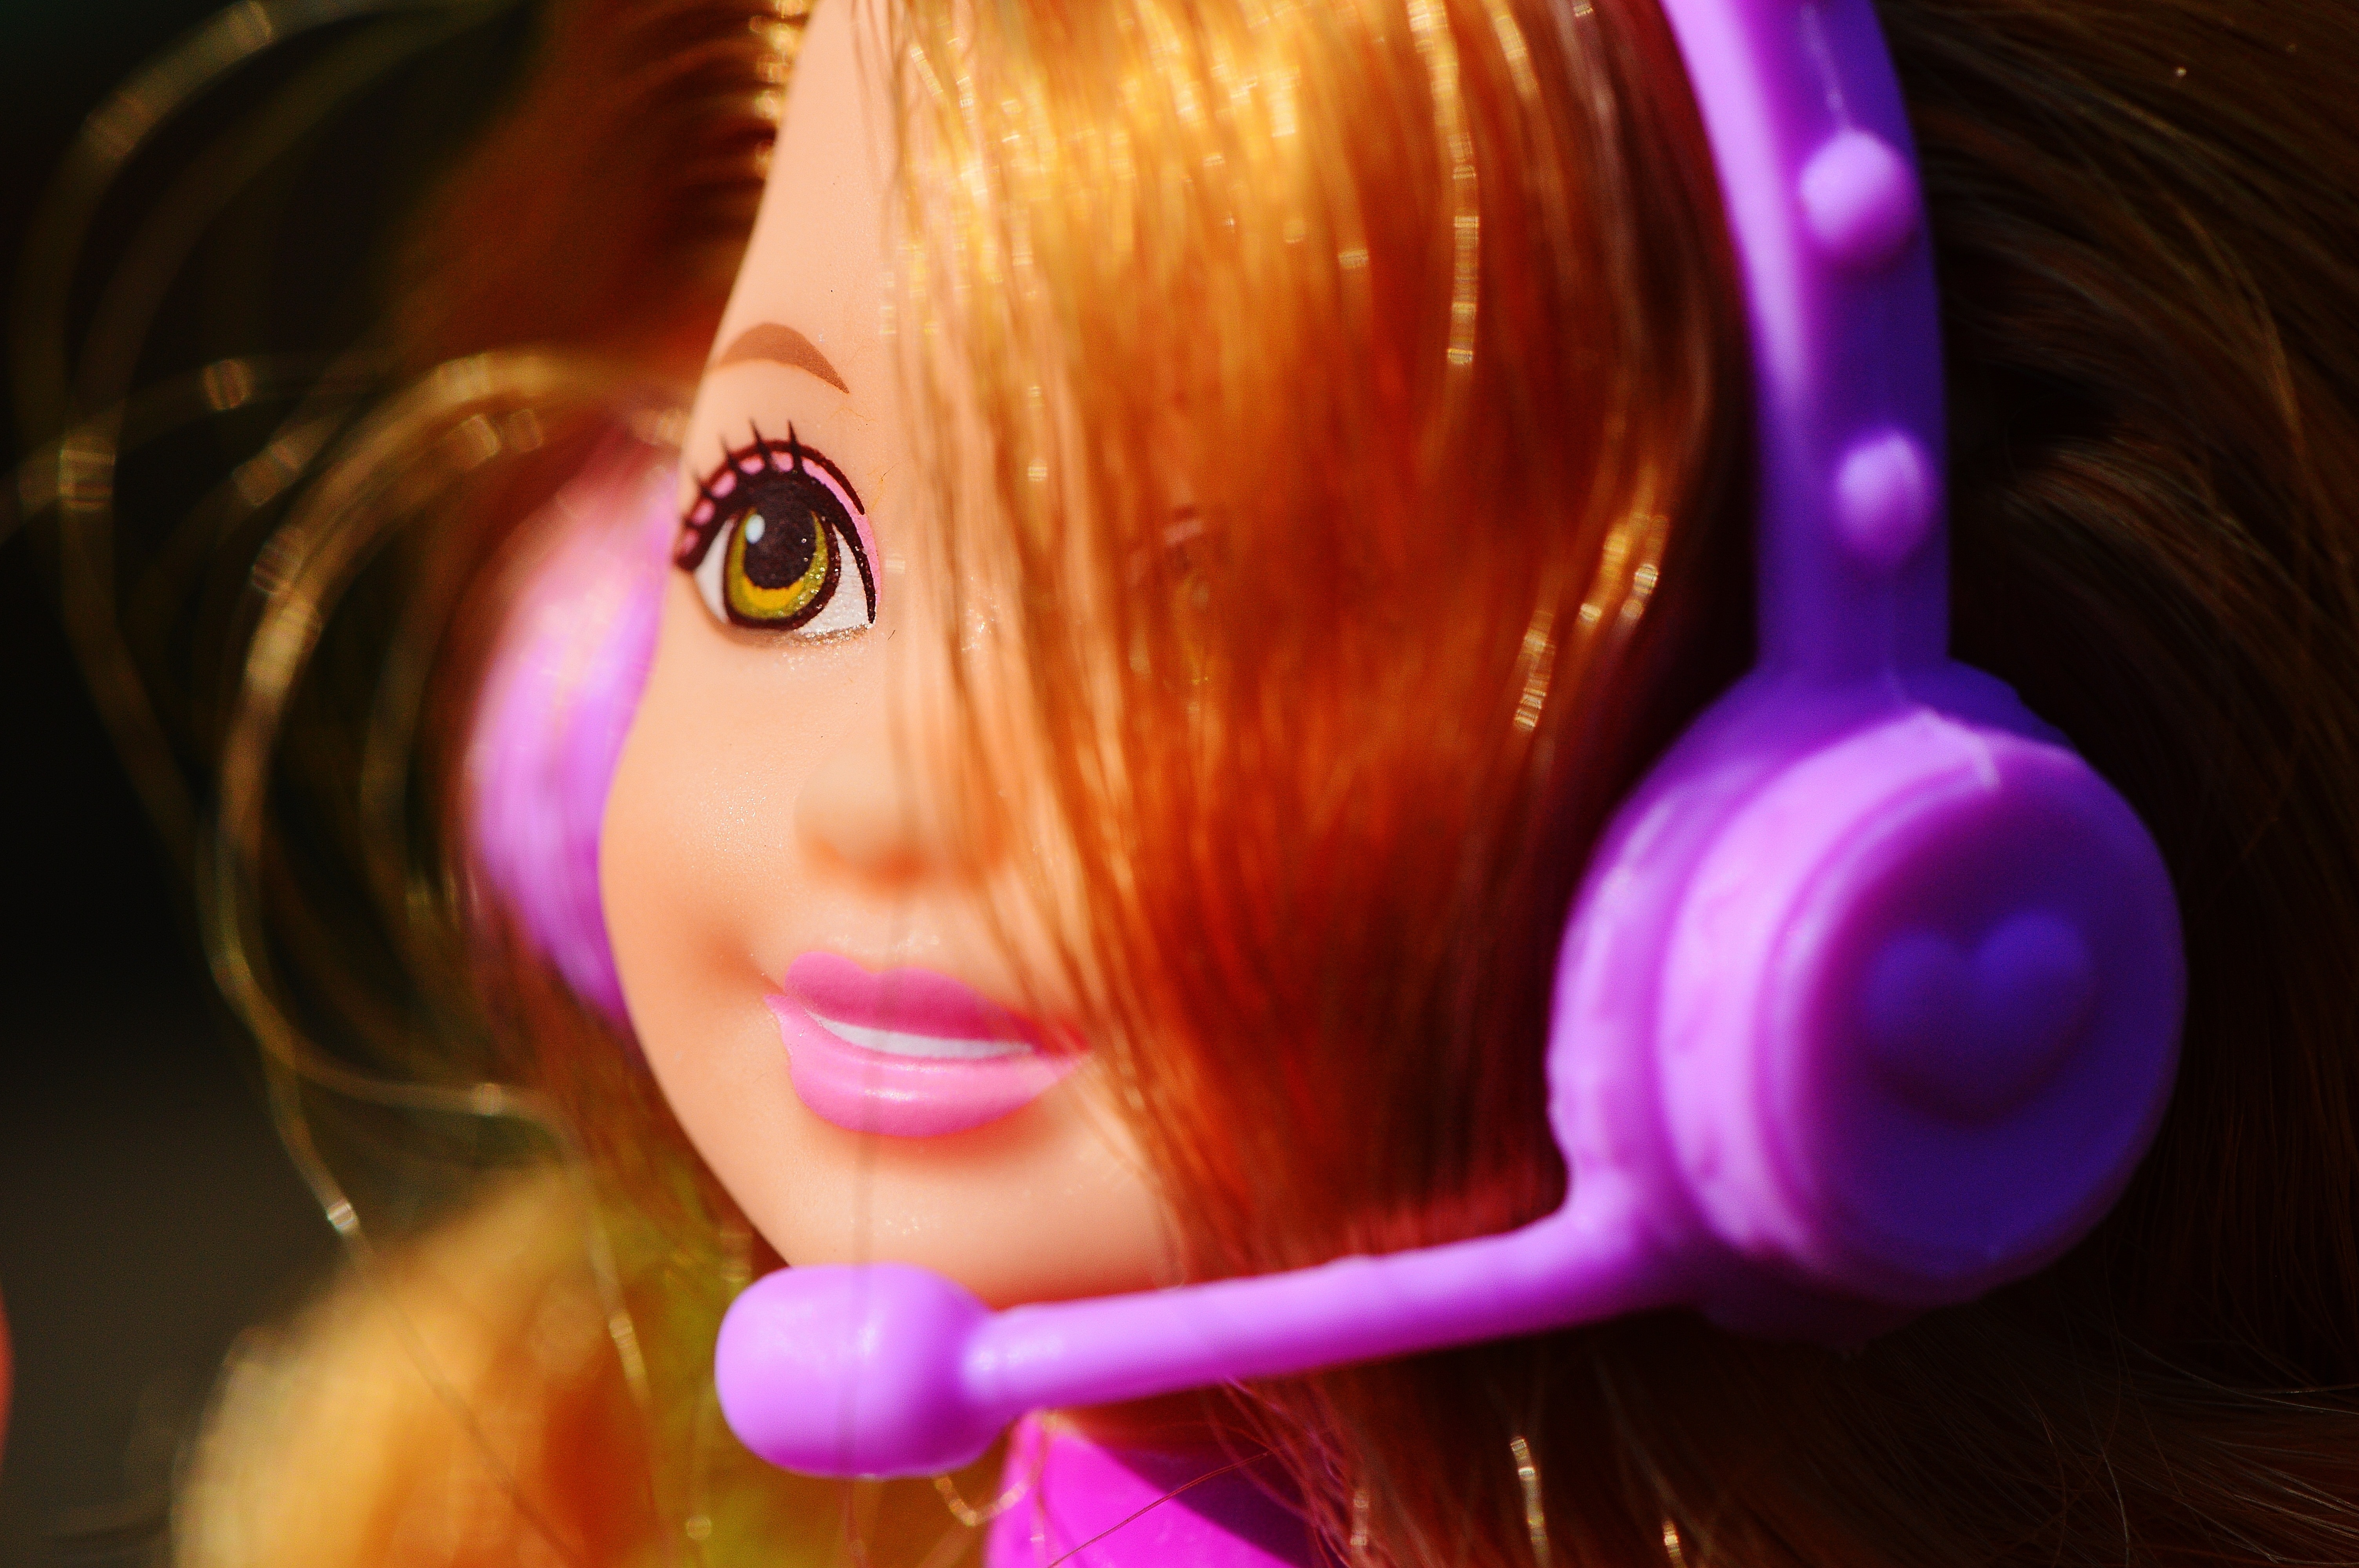 Sing, Music, Headphones, Child, Barbie, one person, purple